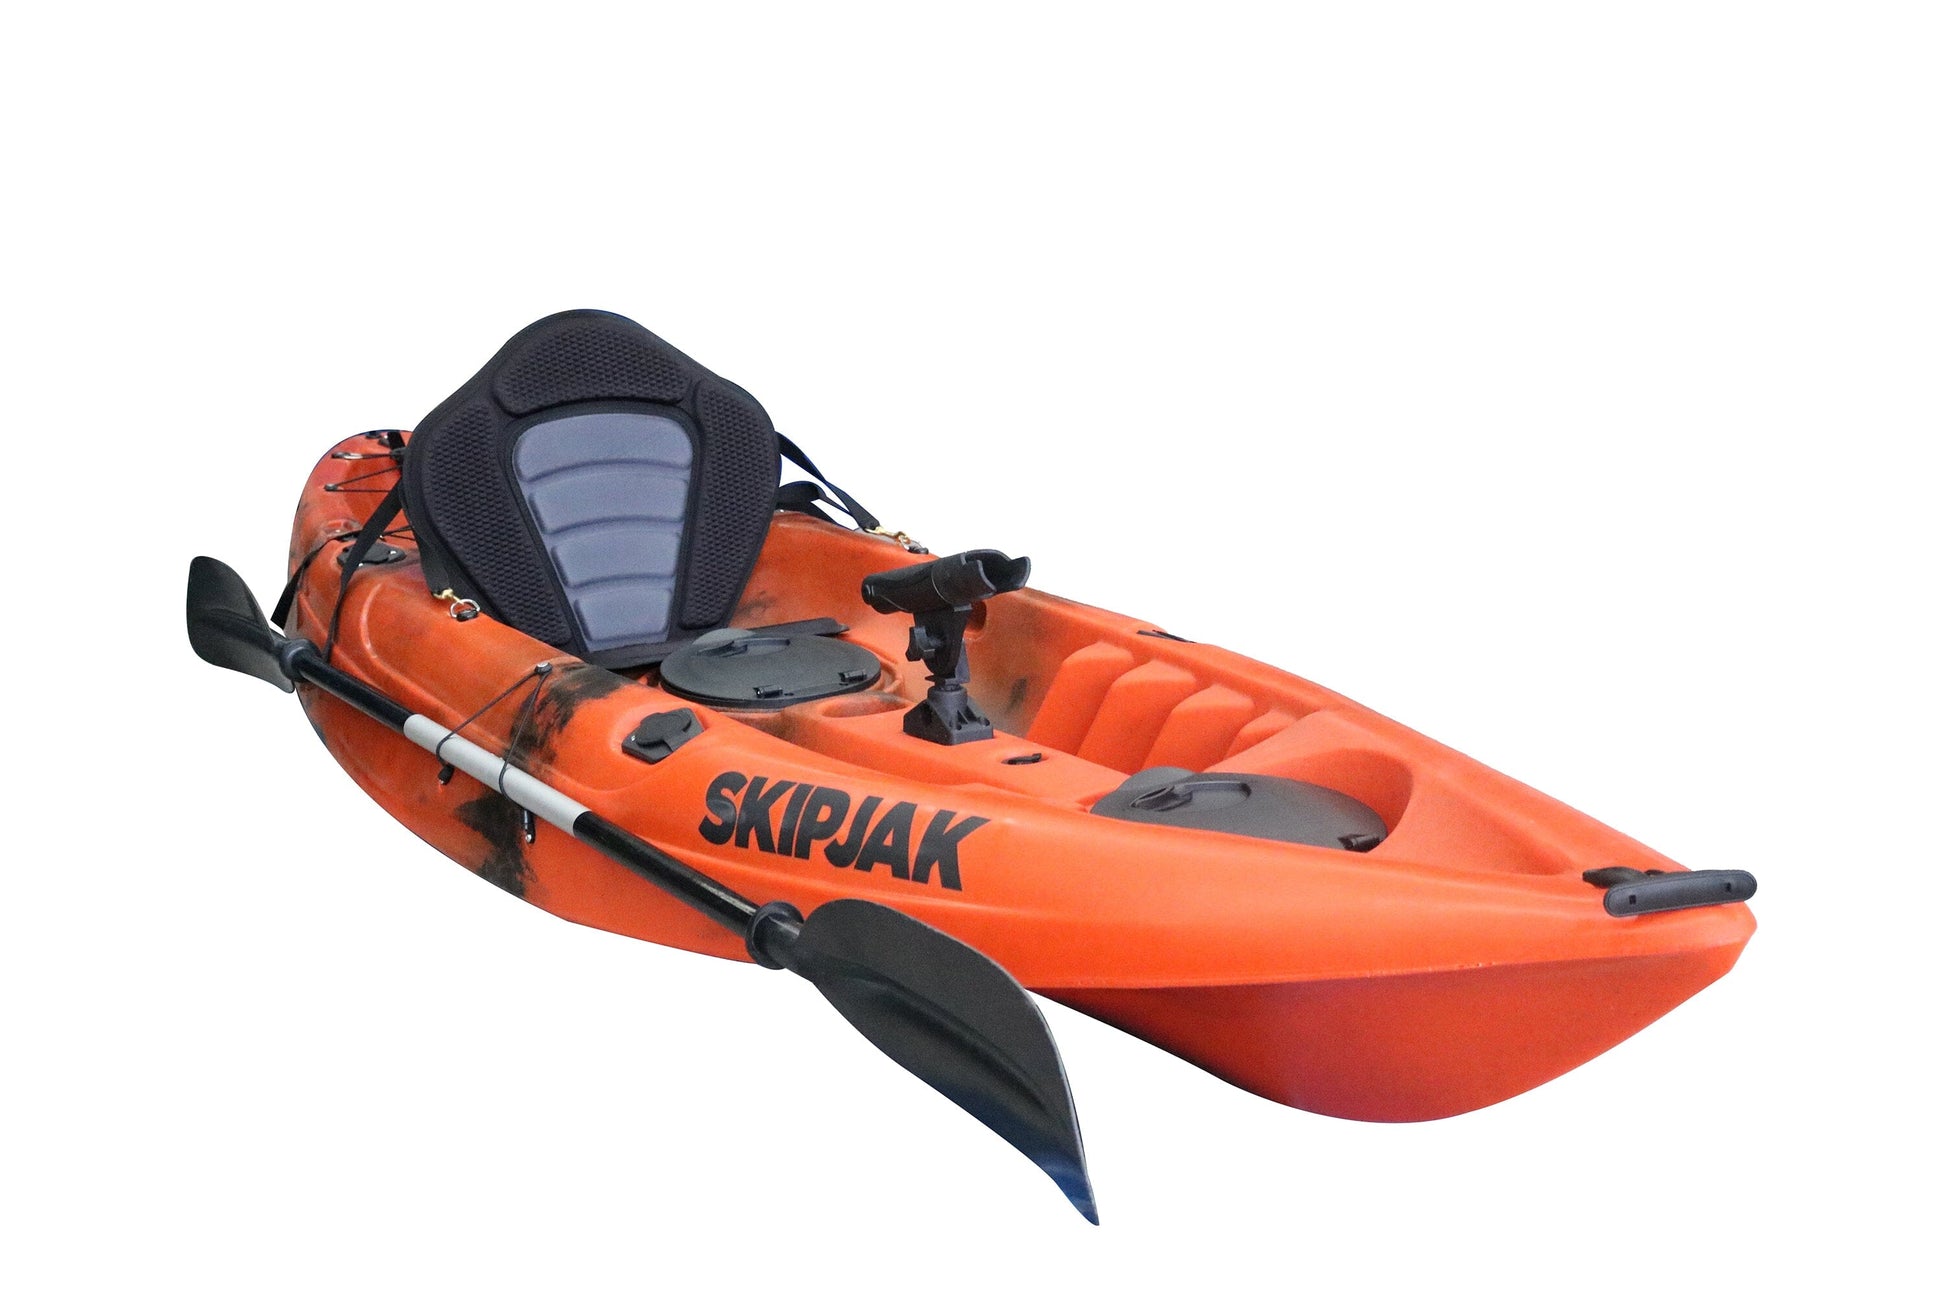 The SkipJak Titan Sit On Top - 9ft 6 inches Kayaks SKIPJAK Orange Black 